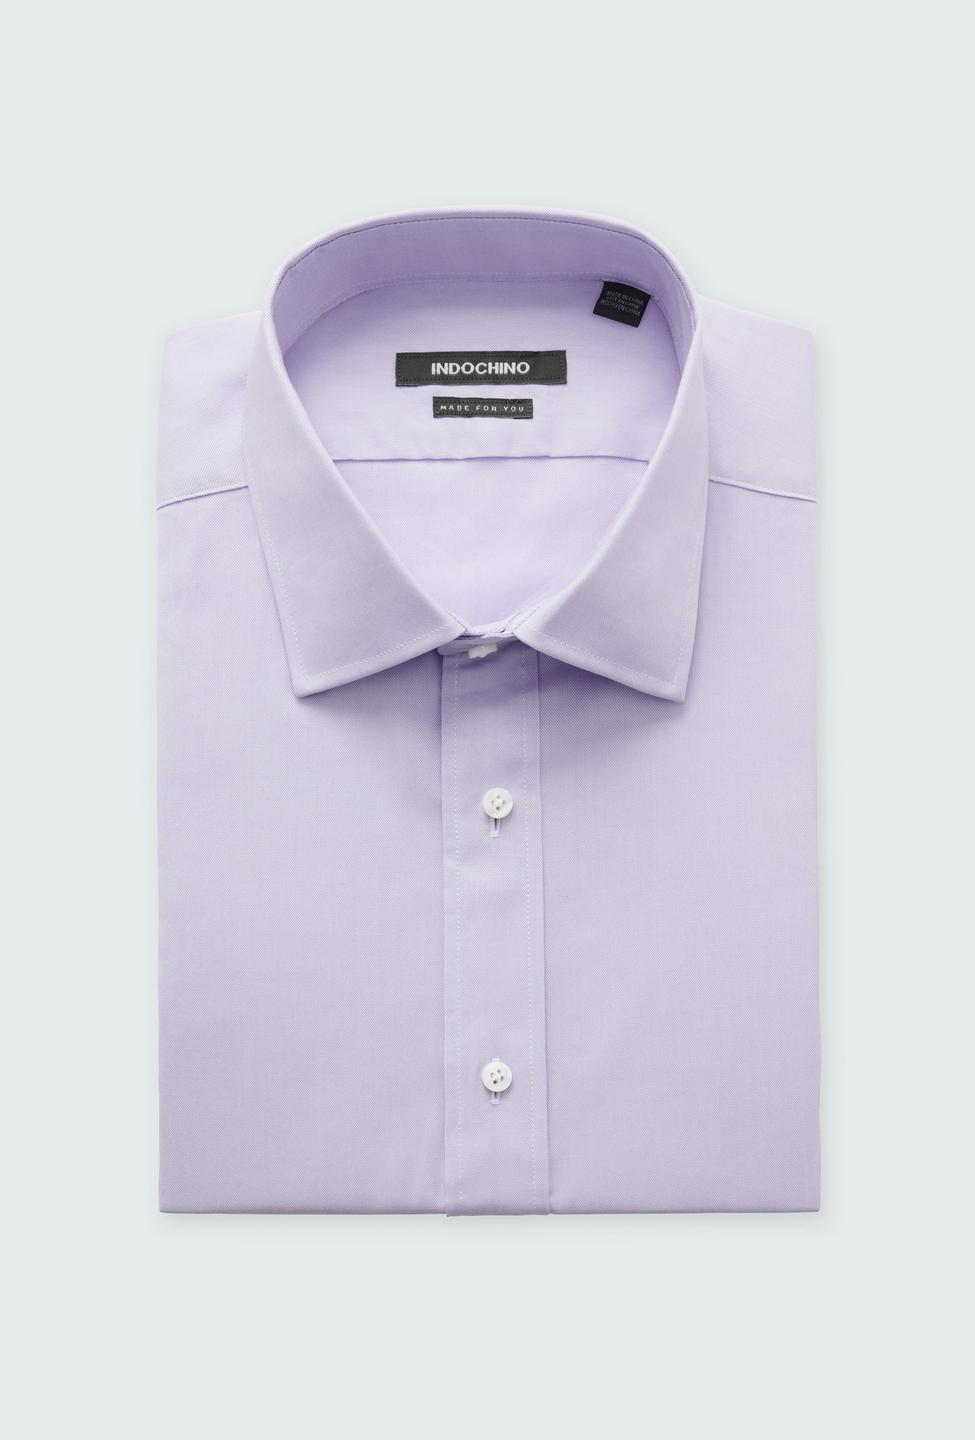 Hailey Cotton Stretch Lavender Shirt